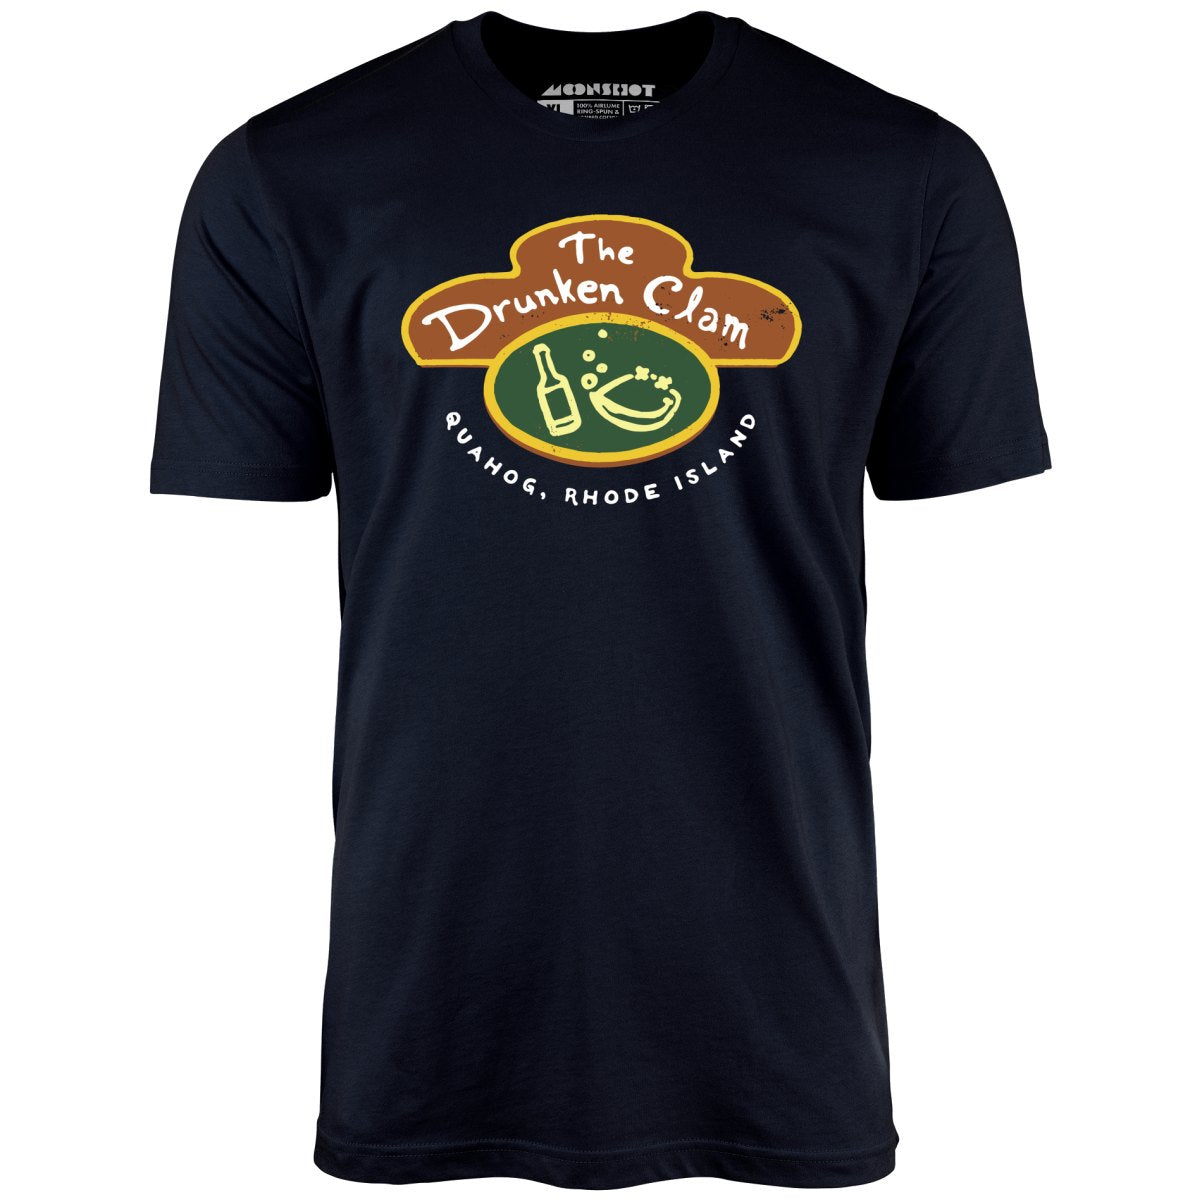 The Drunken Clam - Quahog, Rhode Island - Unisex T-Shirt